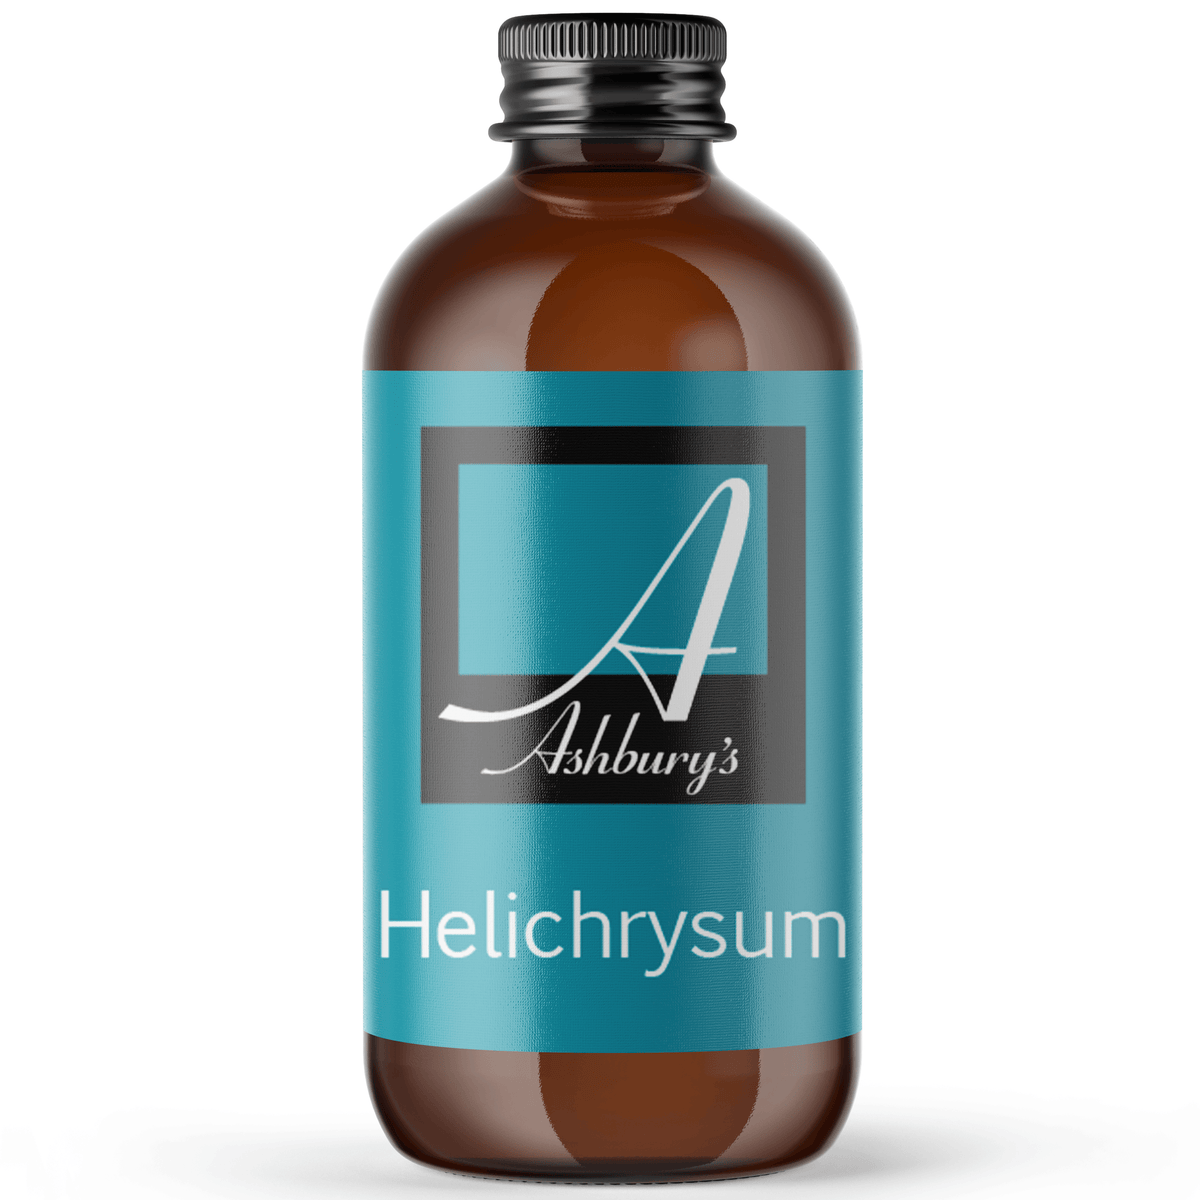 Helichrysum (Helichrysum italicum)